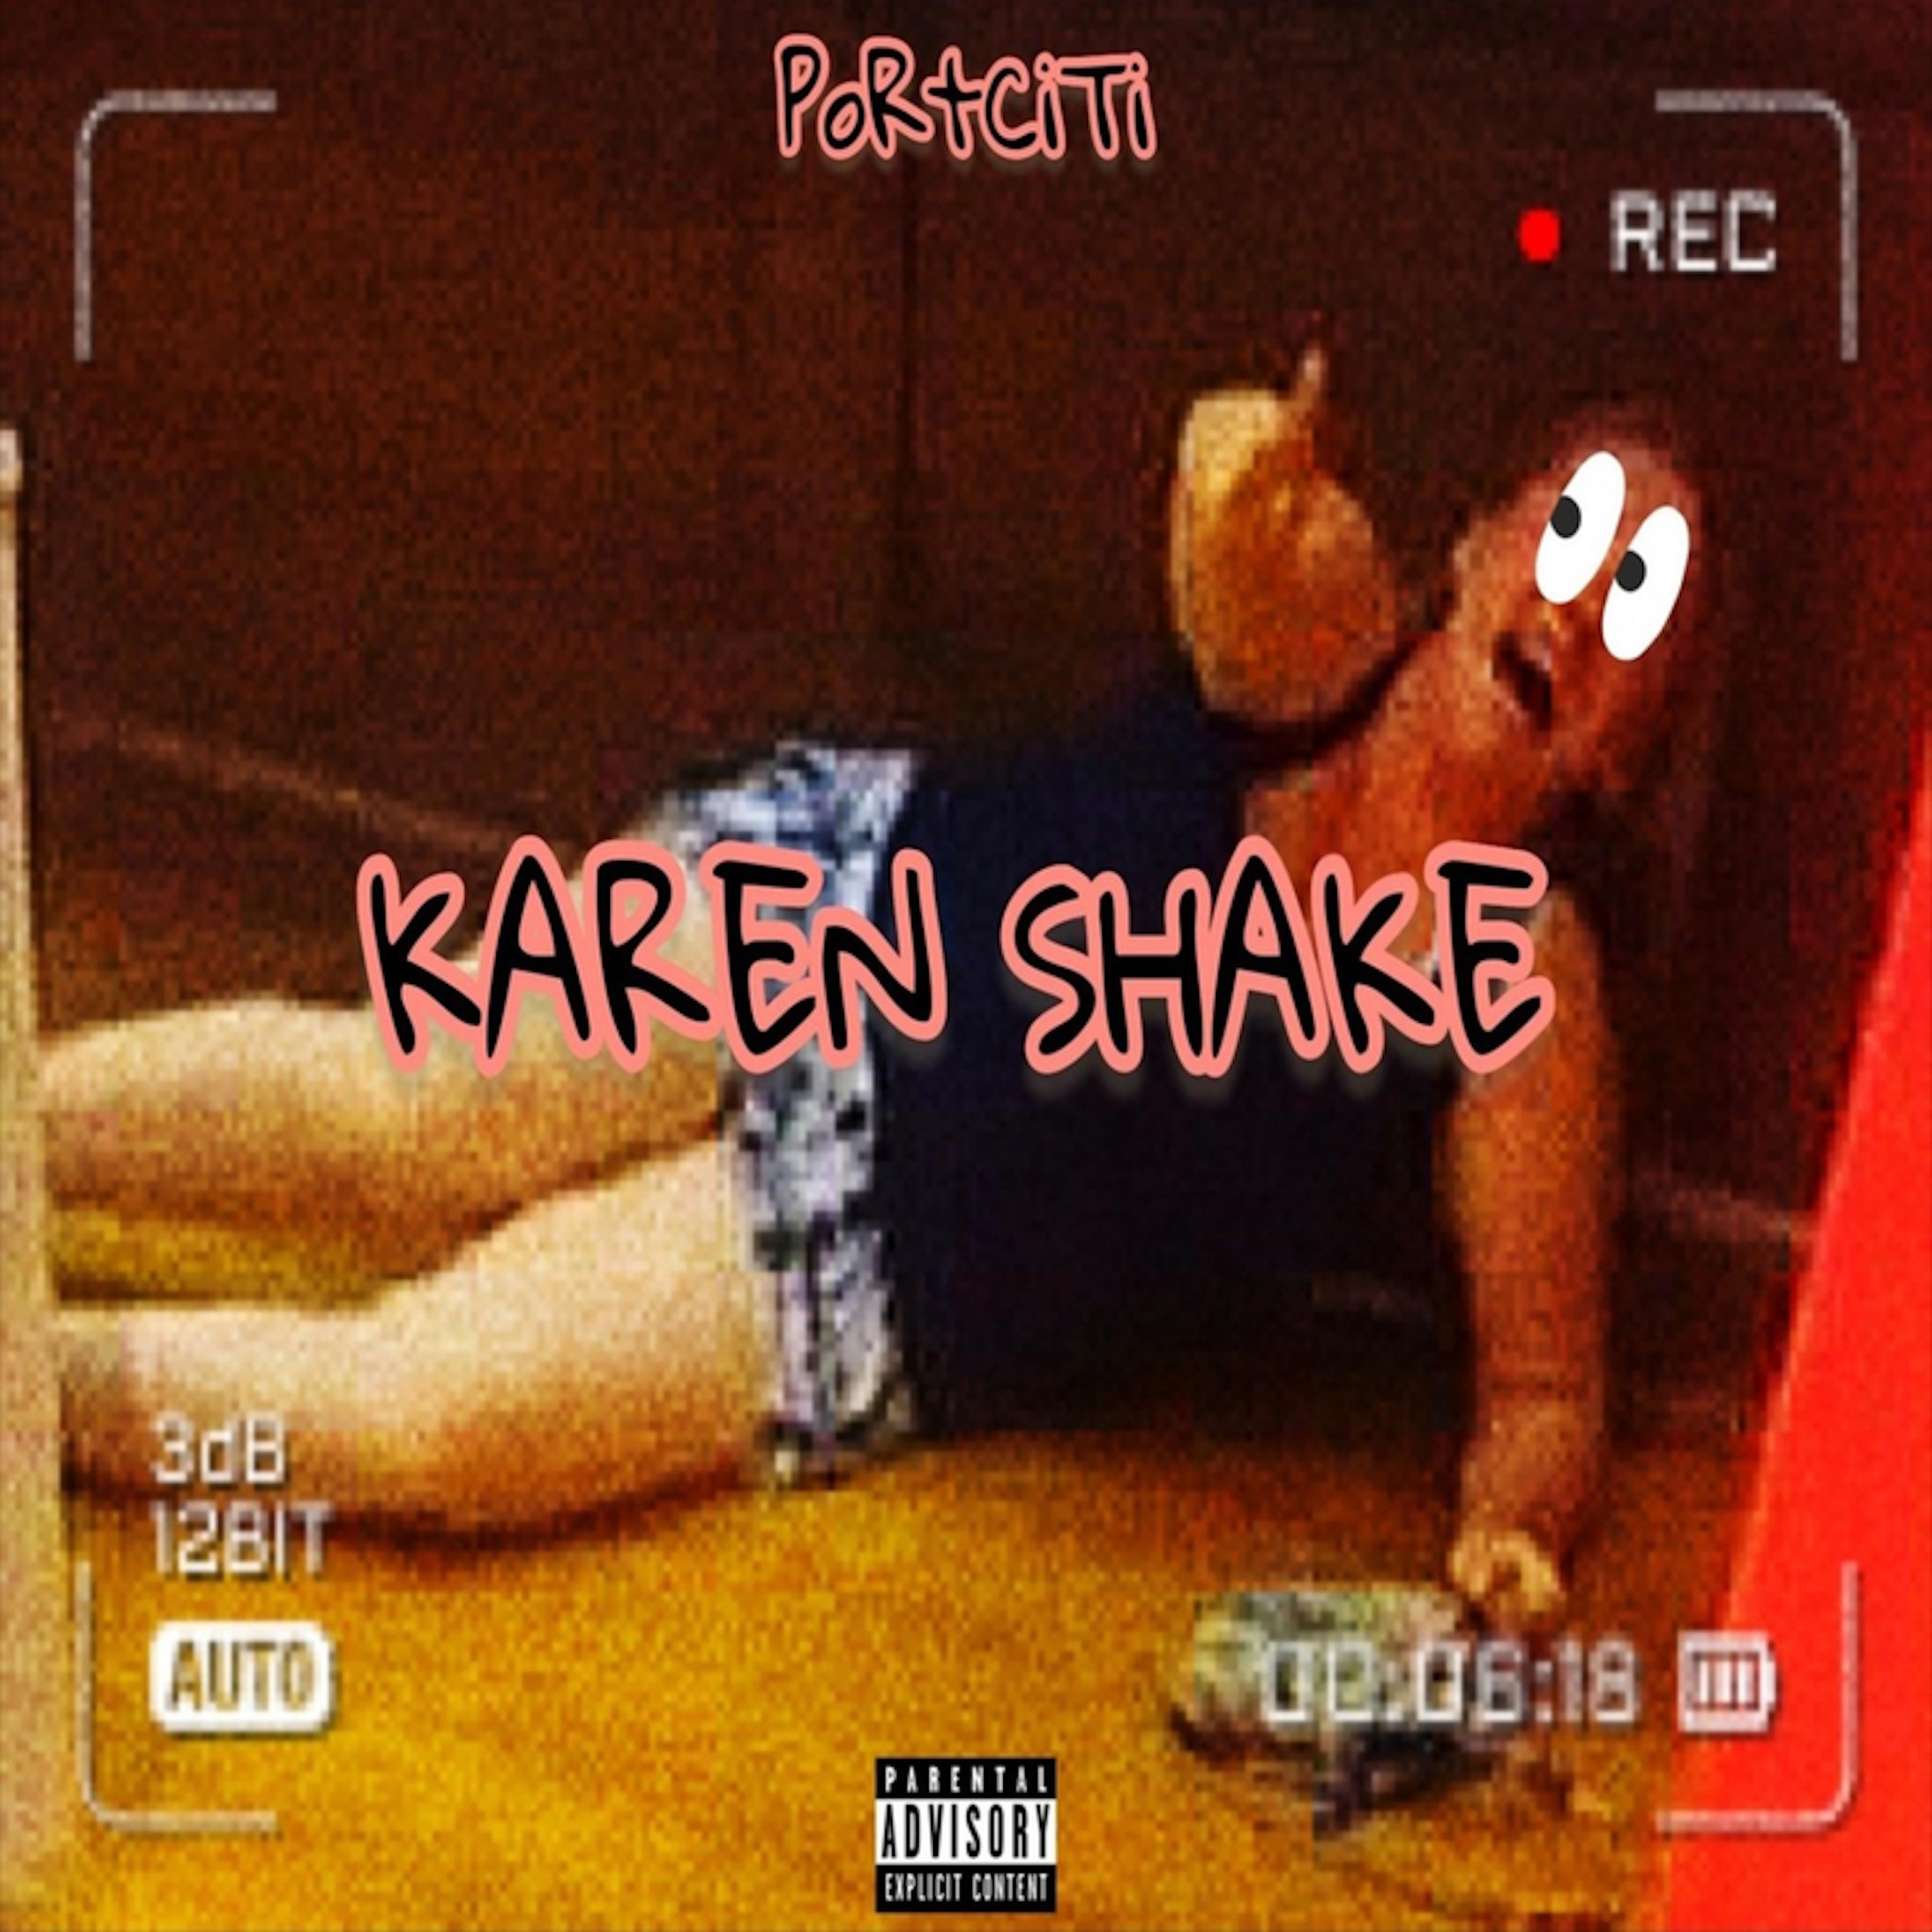 The Karen Shake